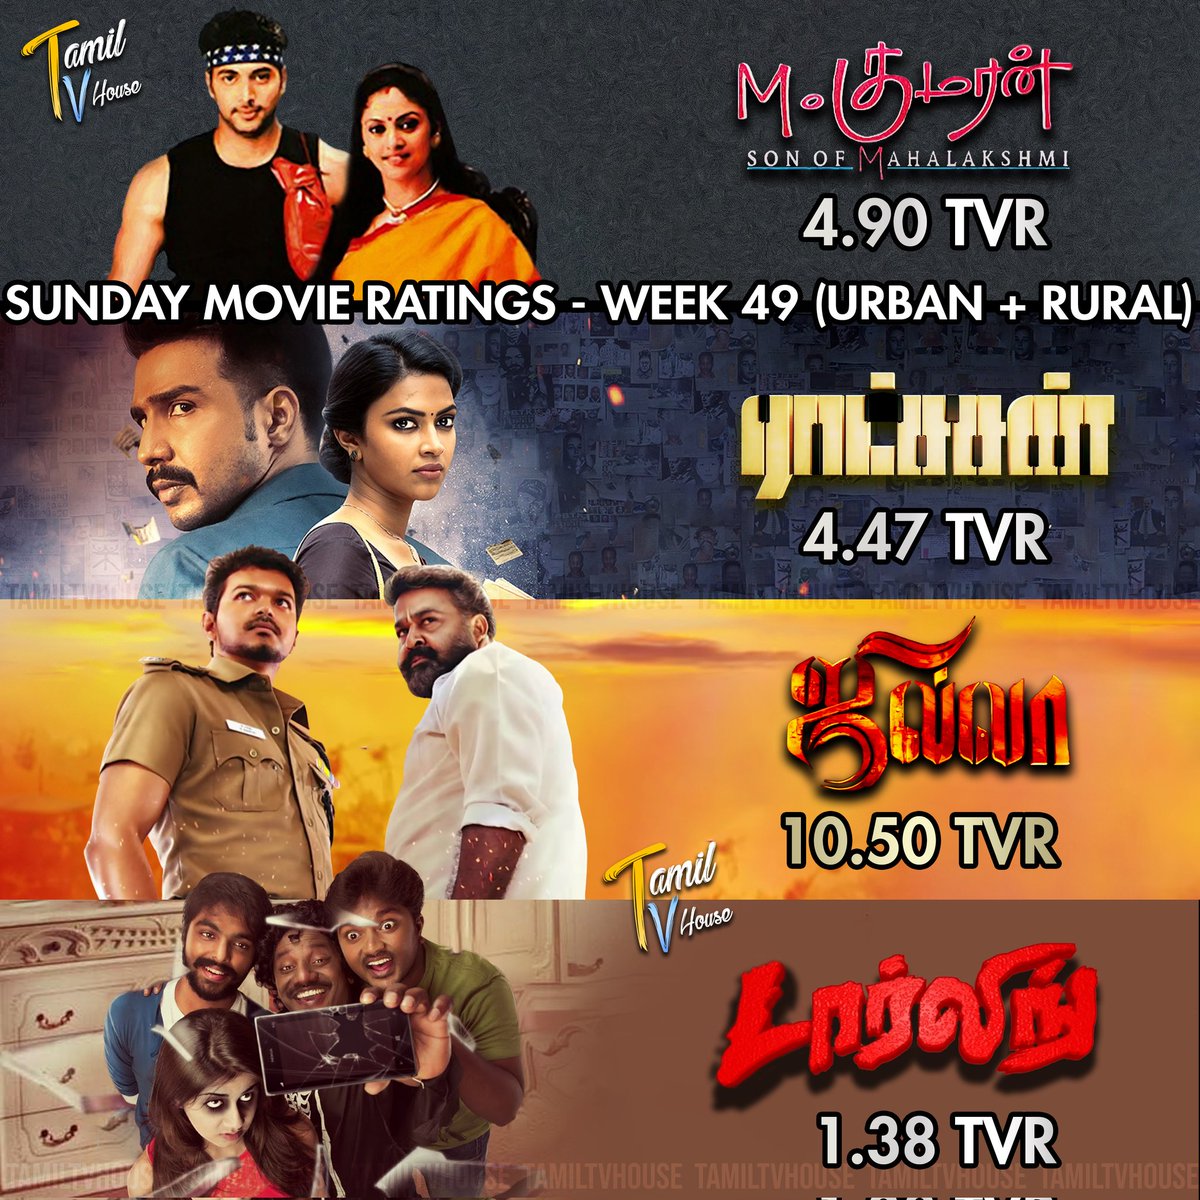 Sunday Movie Ratings On #SunTV
Week 49 - (Urban + Rural)

#MKumaranSonOfMahalakshmi #Ratsasan #Jilla #Darling #JayamRavi #Nathiya #Asin #VishnuVishal #AmalaPaul #ThalapathyVijay #KajalAggarwal #Mohanlal #GVPrakash #NikkiGalrani